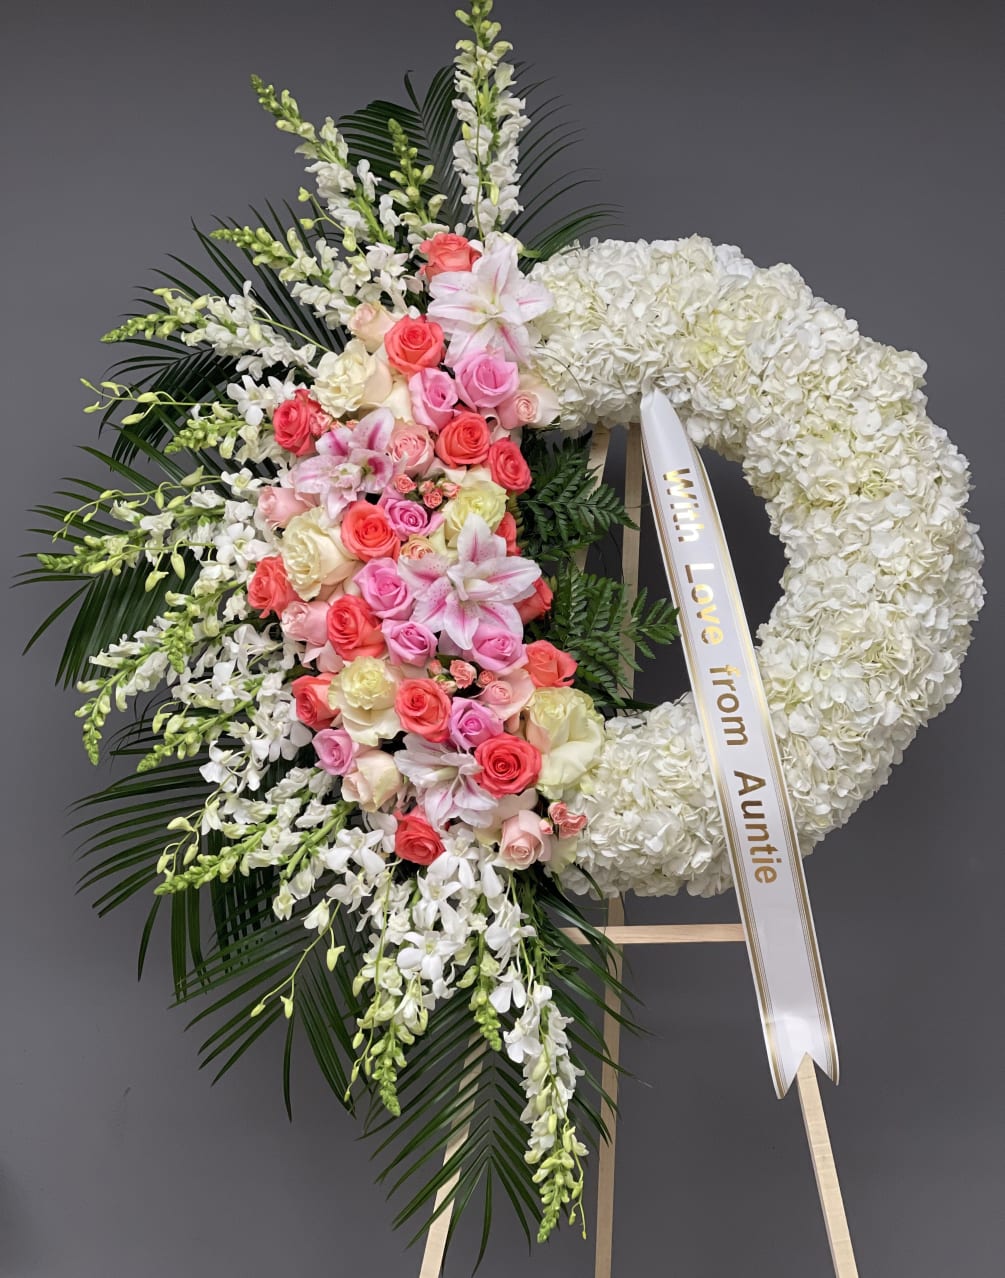 A wreath sympathy flower arrangement is a circular arrangement of flowers that